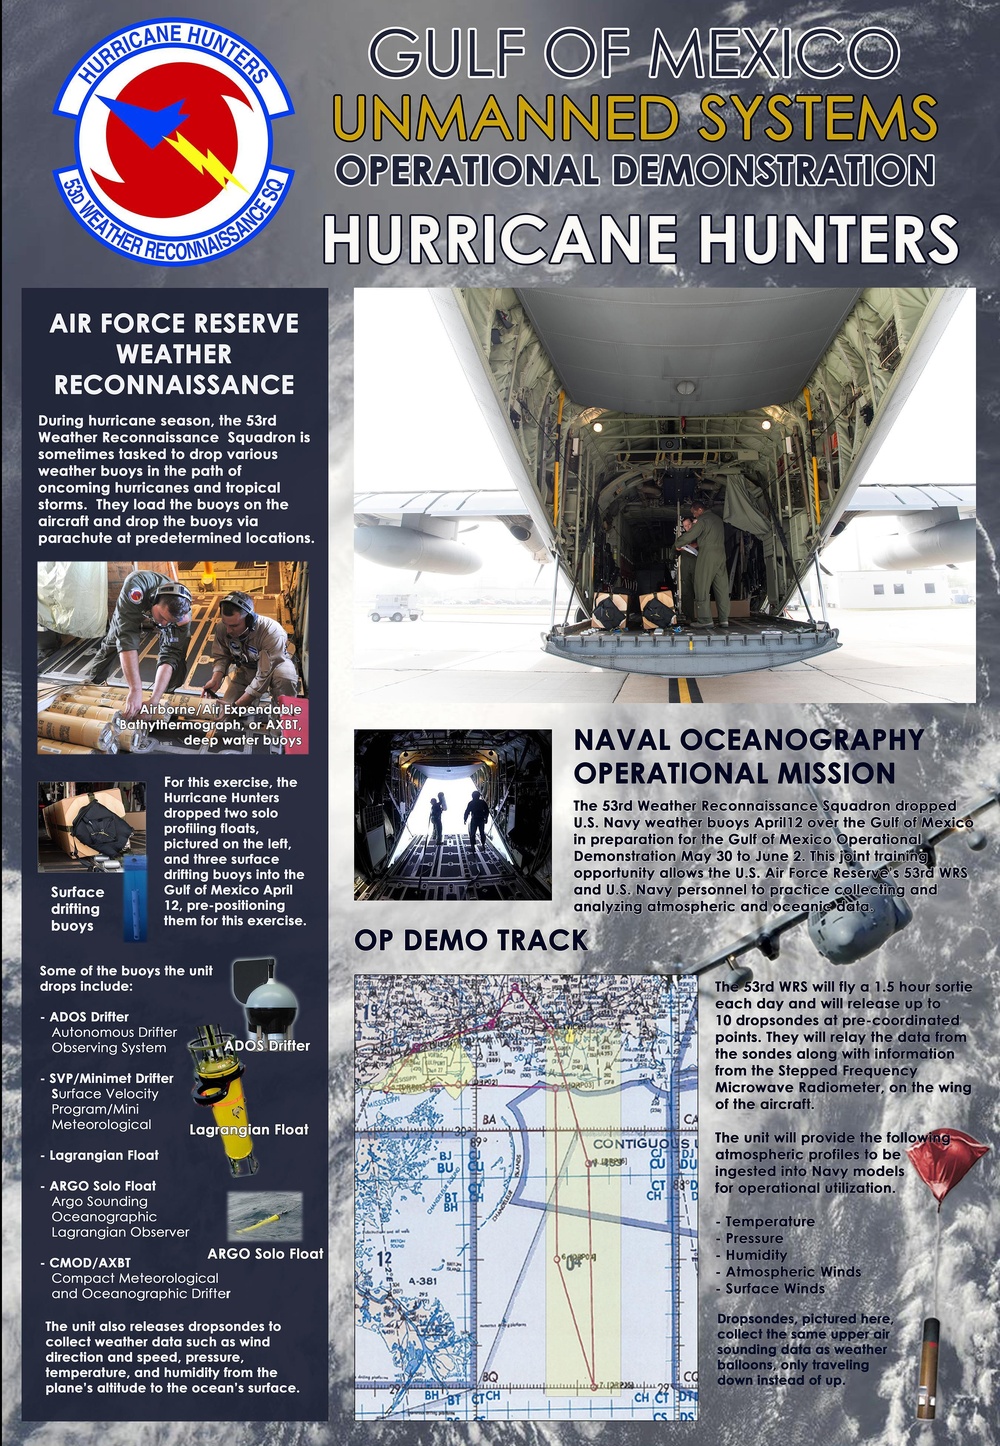 Hurricane Hunters take part in U.S. Navy operational demonstration